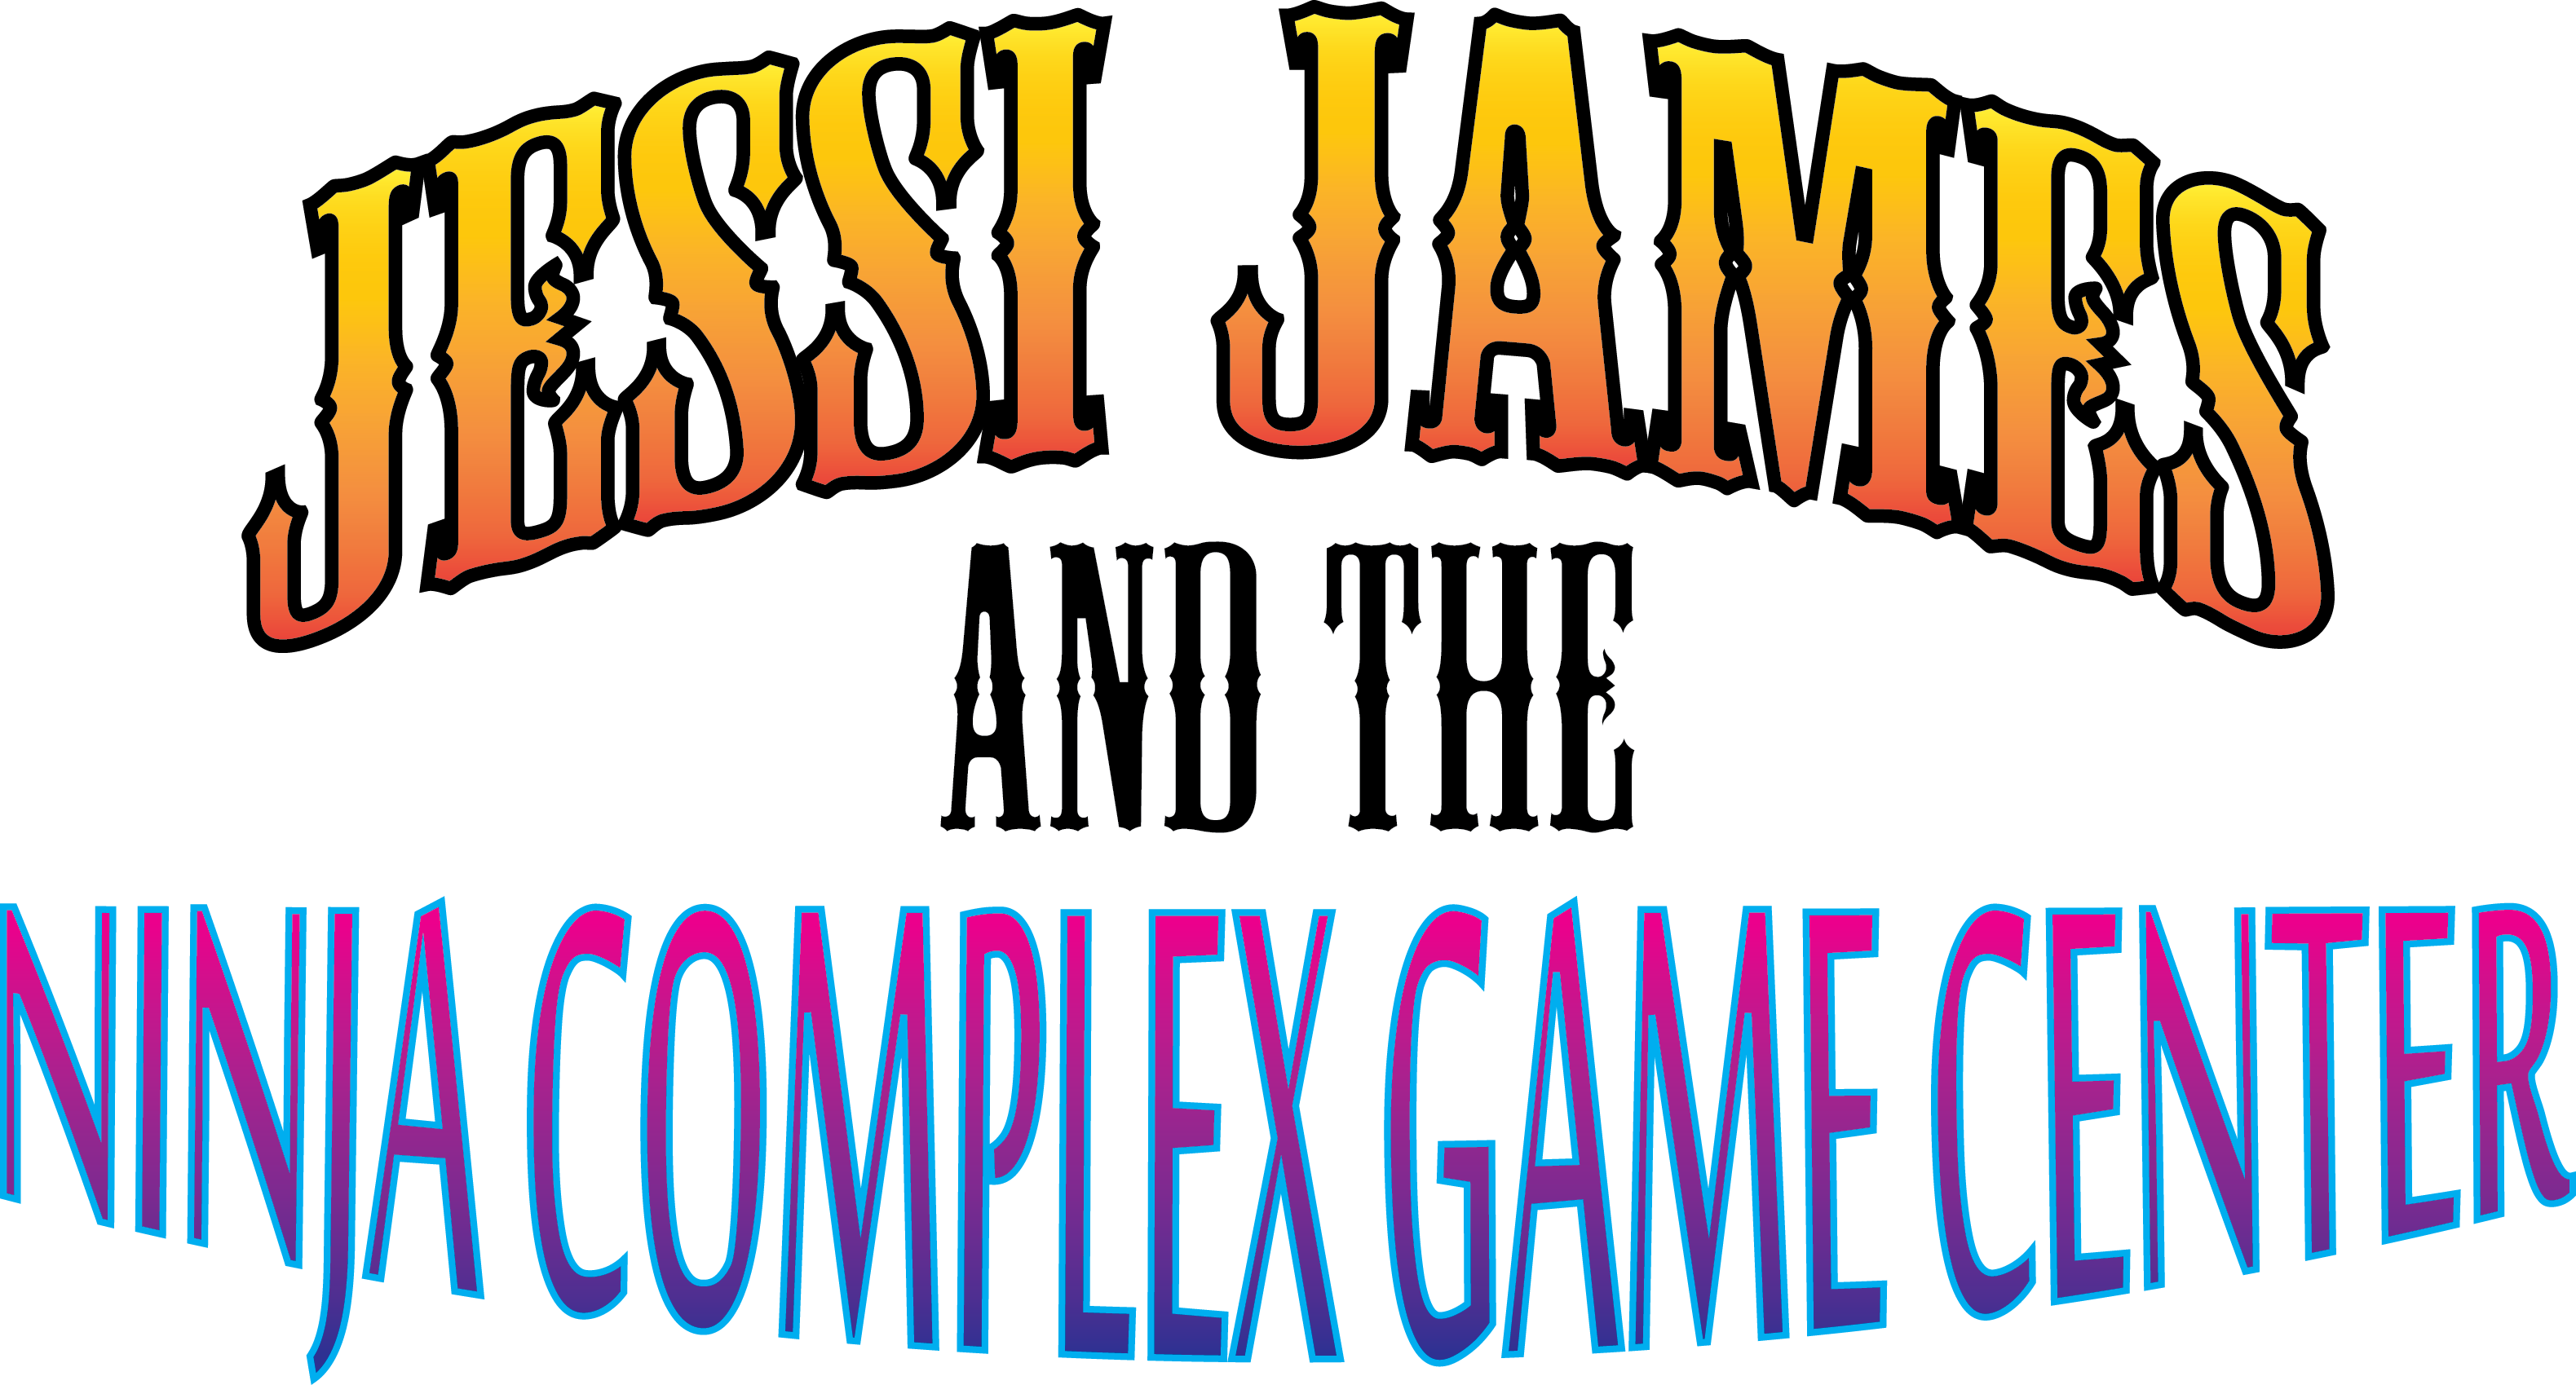 Jessi James and the Ninja Complex Game Center